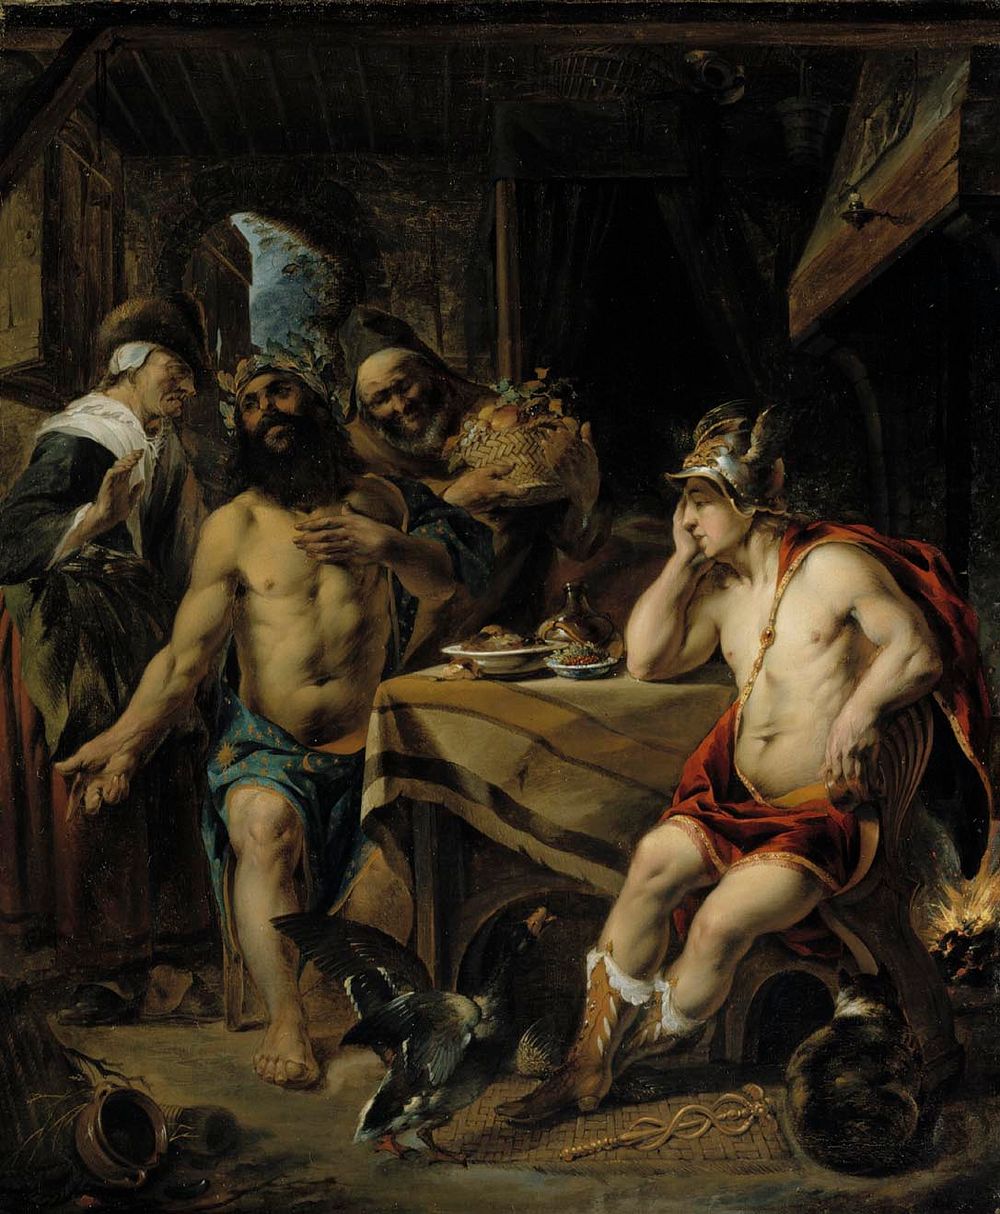 Jupiter and mercury visiting philemon and baucis, 1644 - 1676